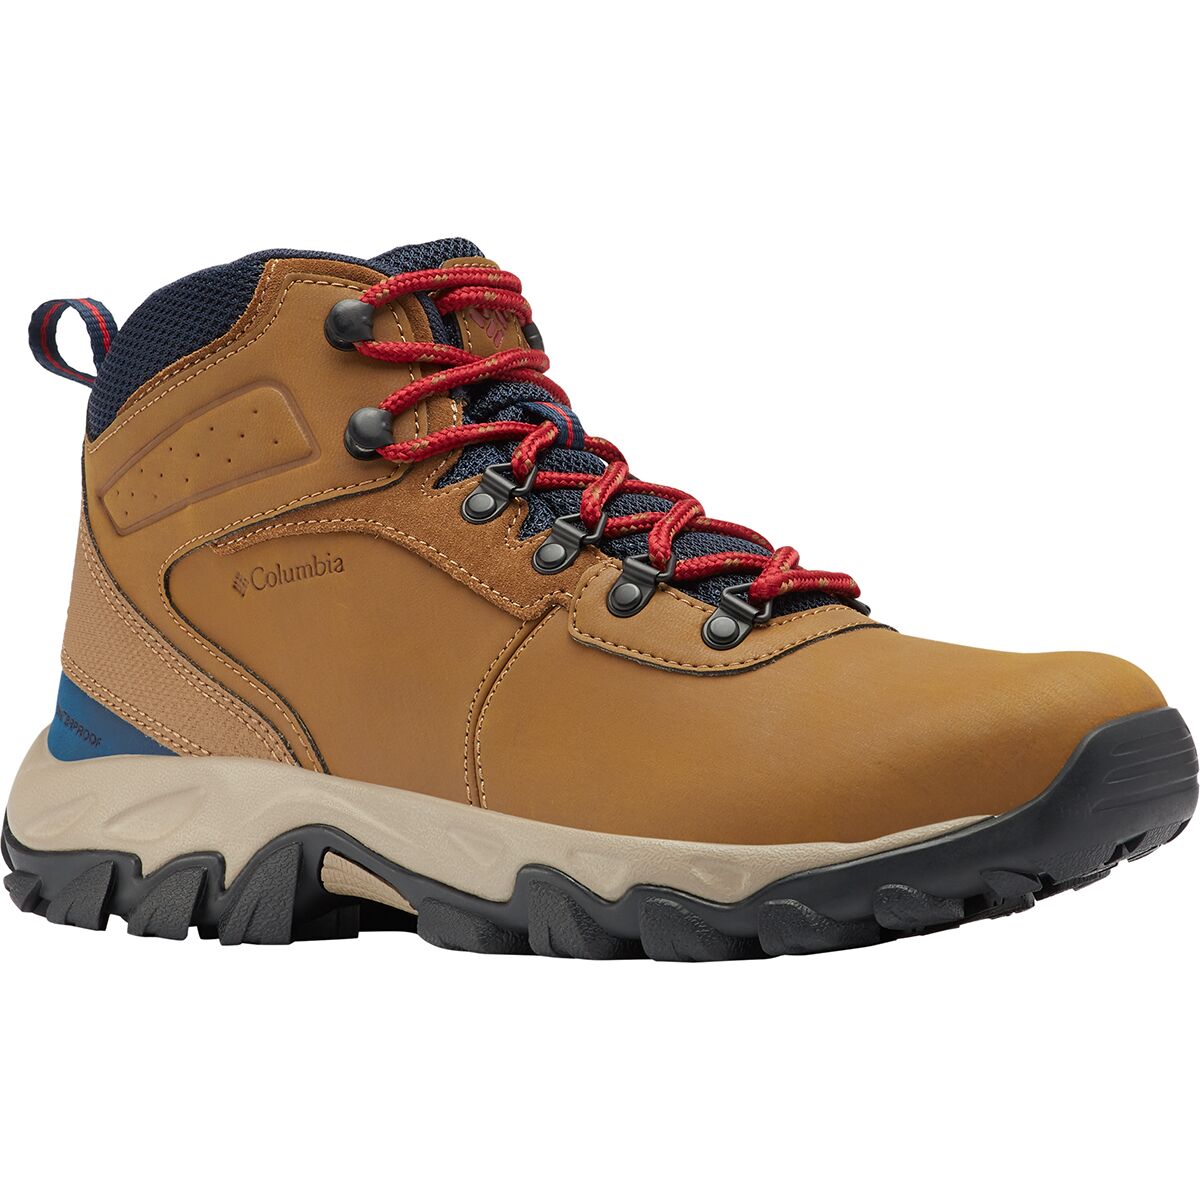 columbia men's newton ridge plus ii waterproof hiking boot review